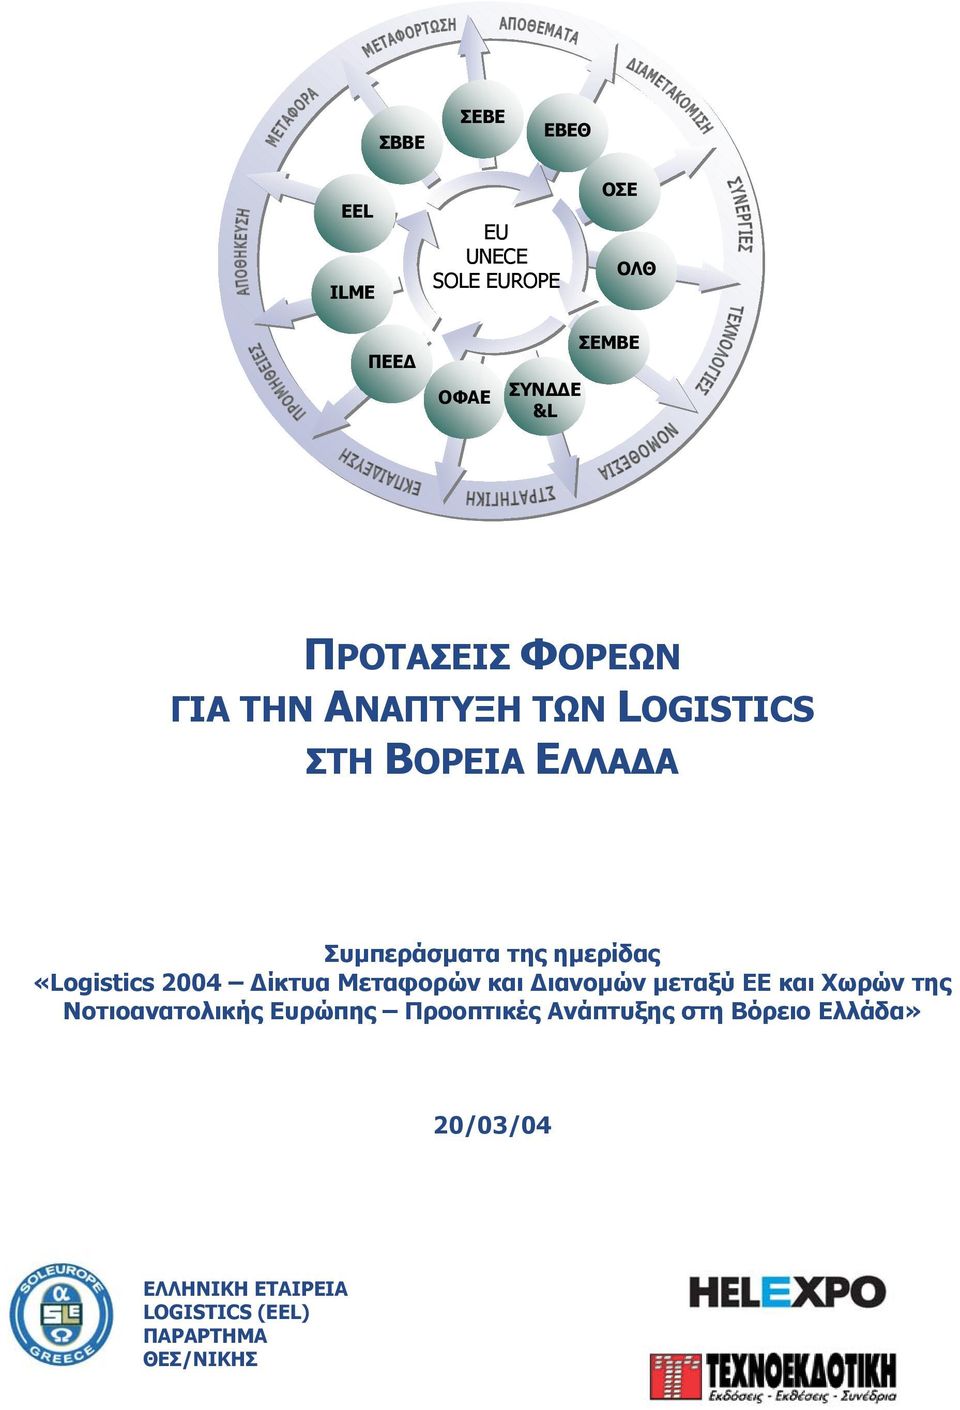 «Logistics 2004 ίκτυα Μεταφορών και ιανοµών µεταξύ ΕΕ και Χωρών της Νοτιοανατολικής